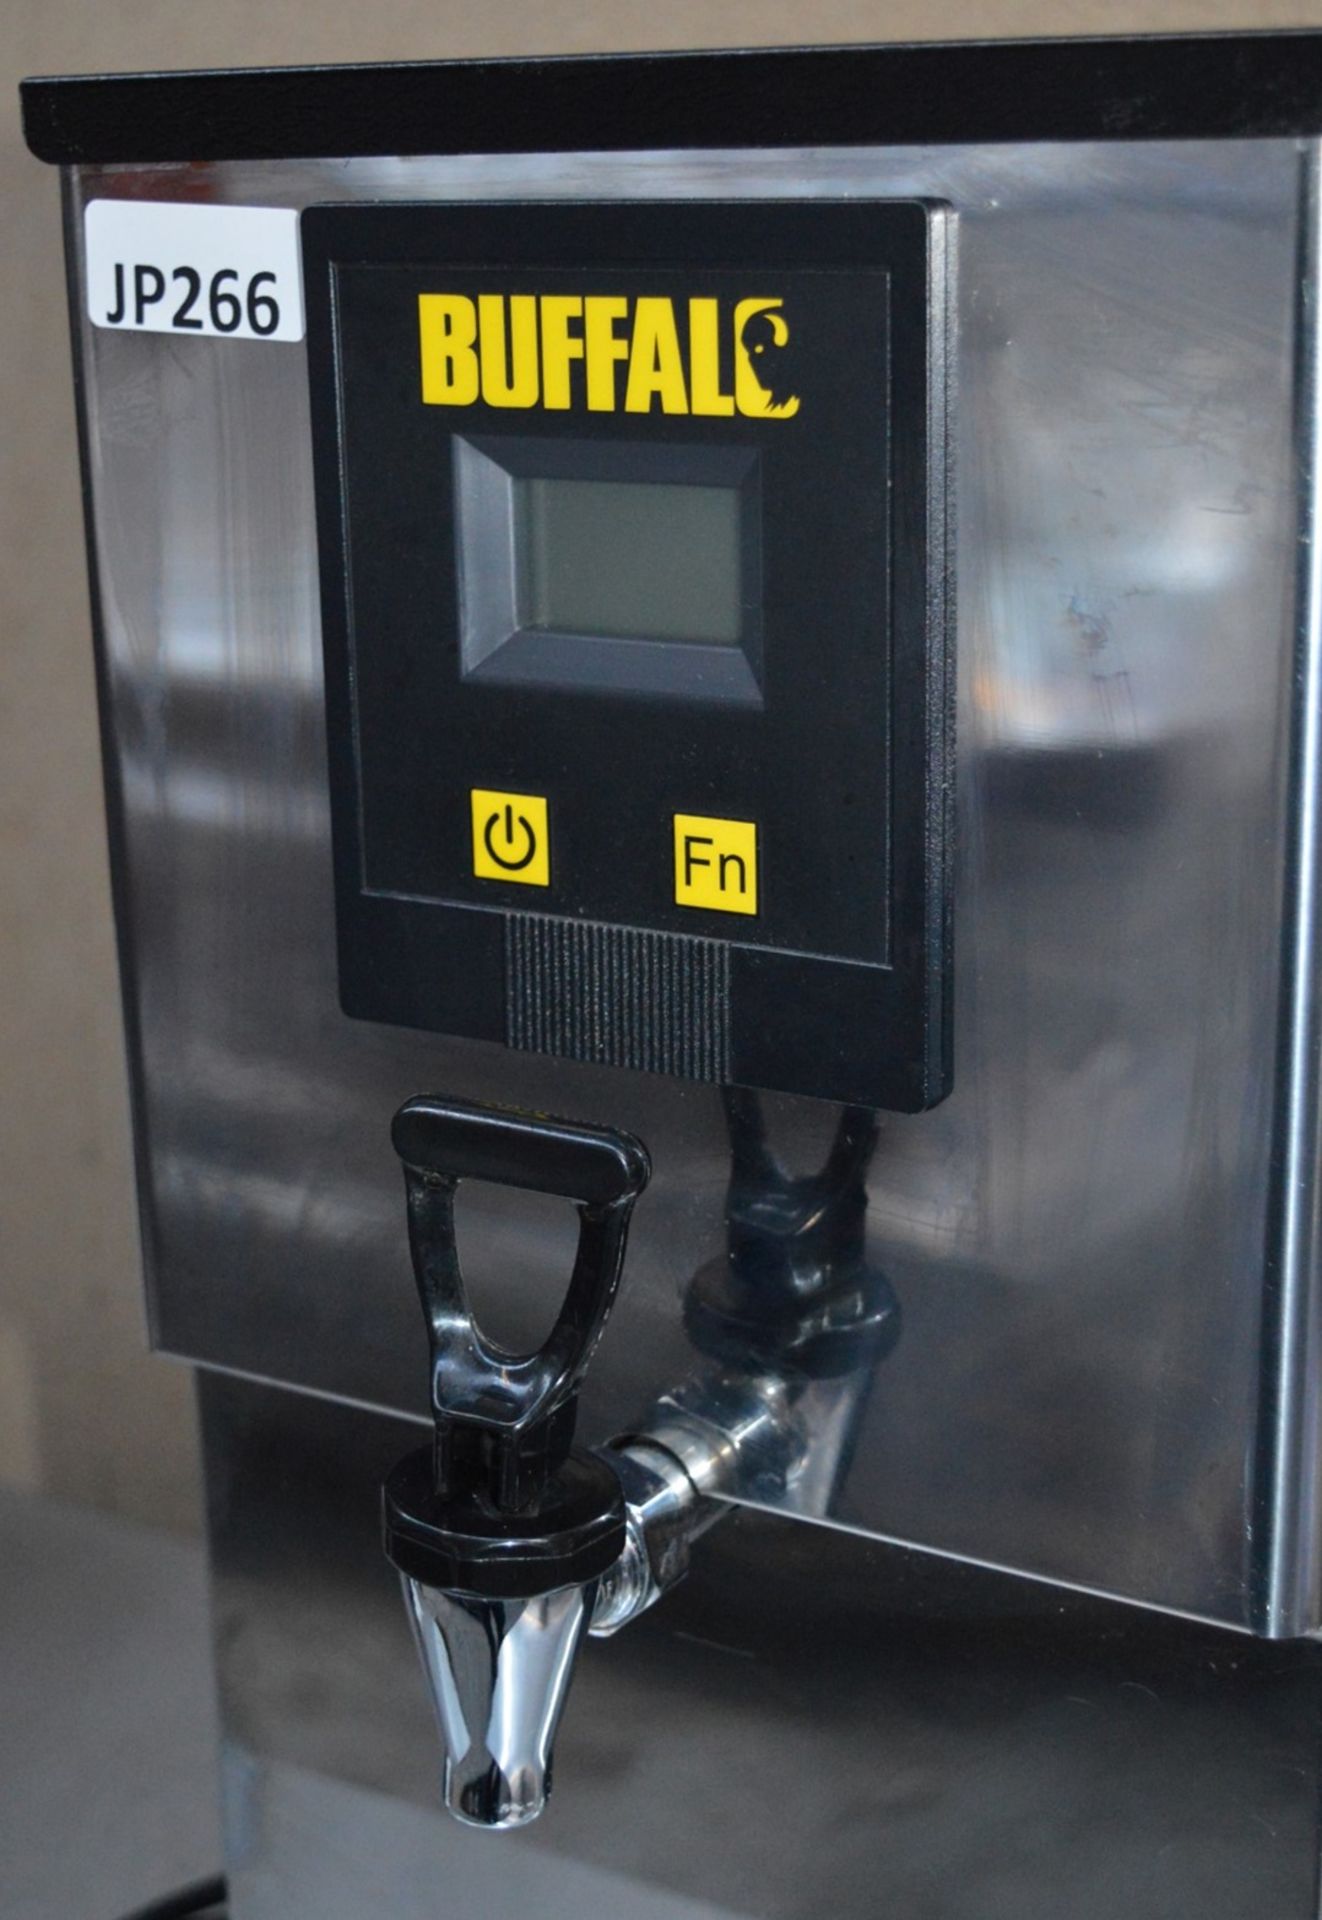 1 x Buffalo Stainless Steel 10 Litre Autofill Water Boiler - Hot Water Dispenser - Model NBB3F - - Image 2 of 3